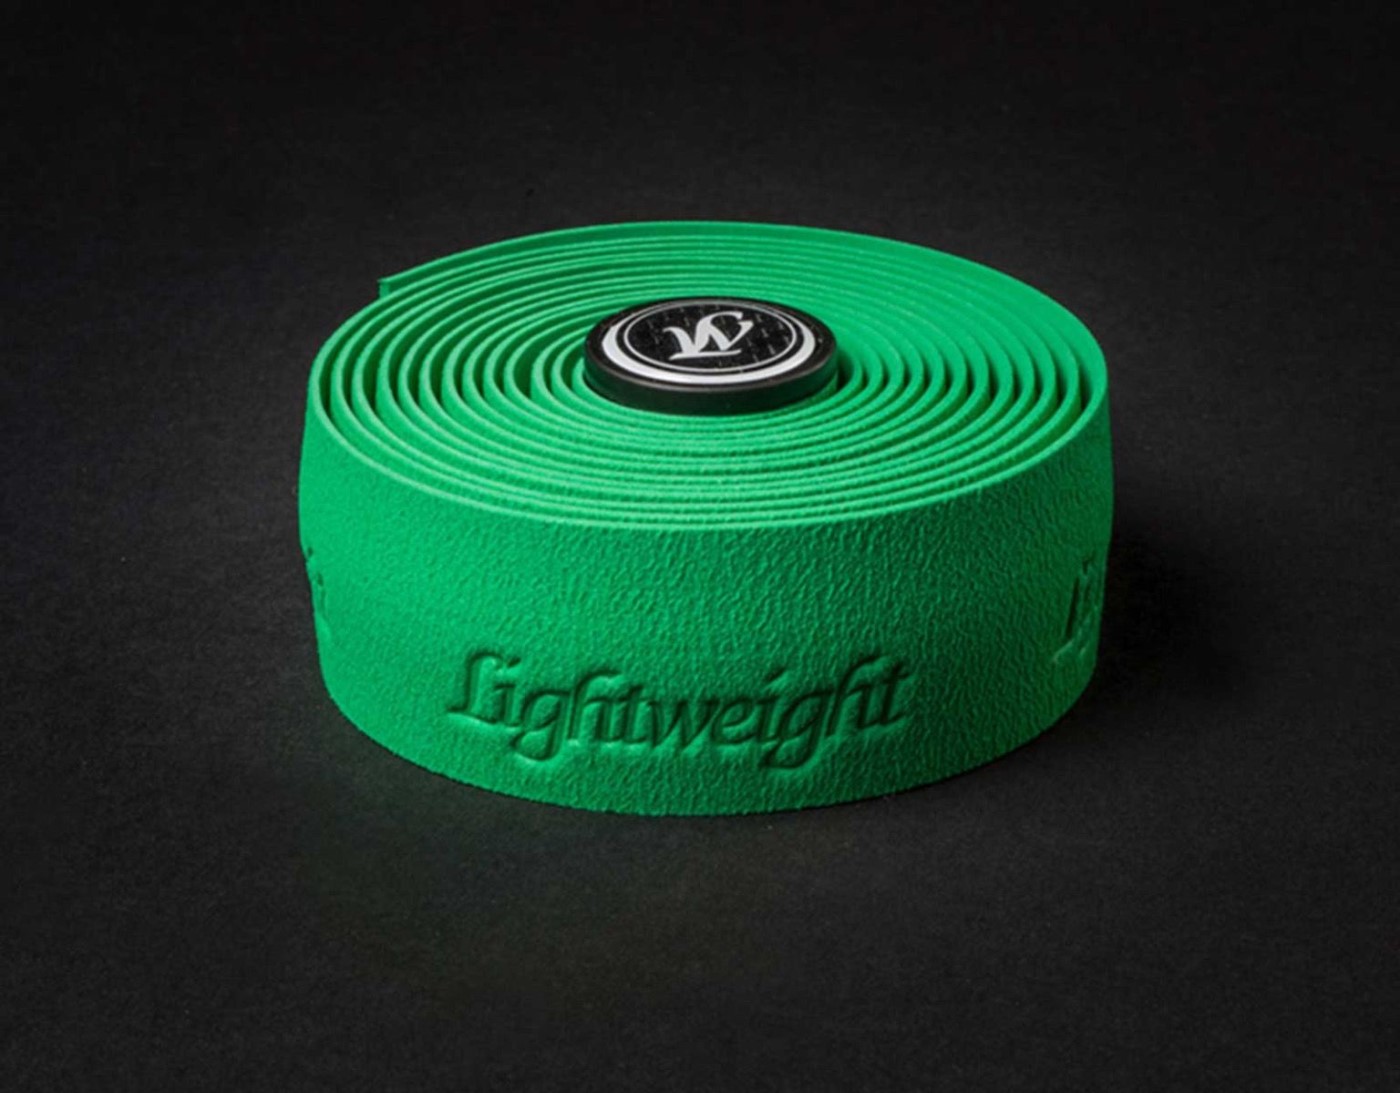 Omotávka LIGHTWEIGHT Handband zelená